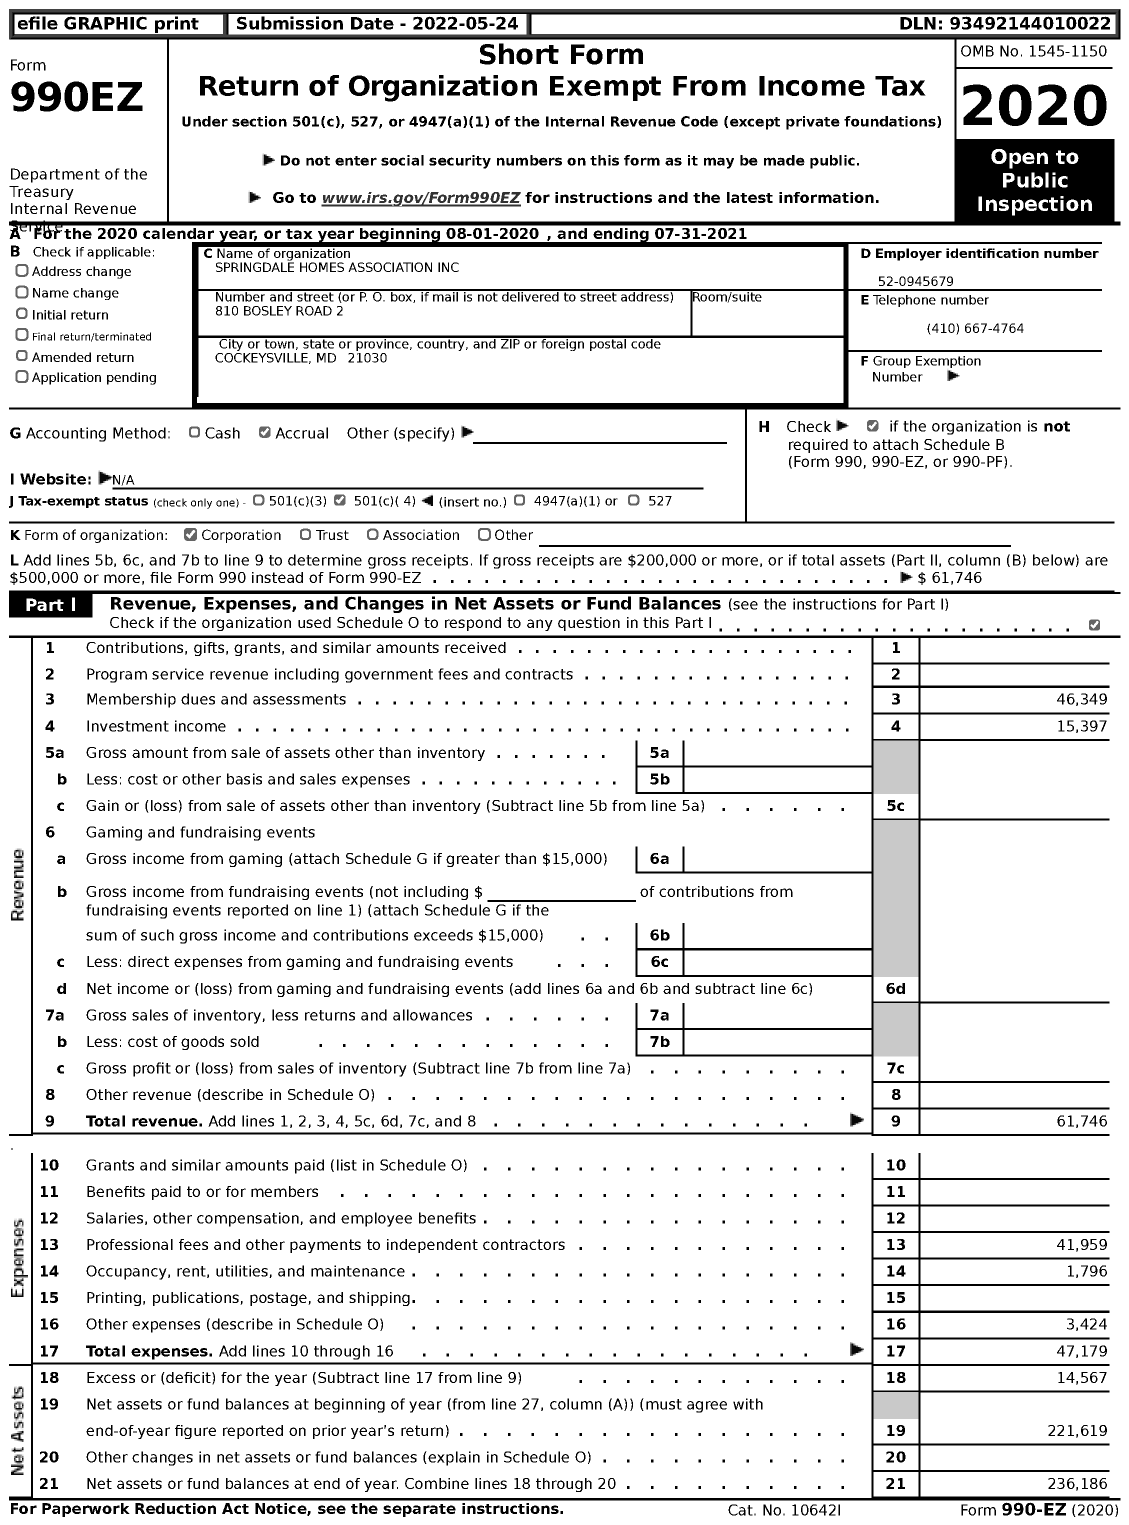 Image of first page of 2020 Form 990EZ for Springdale Homes Association